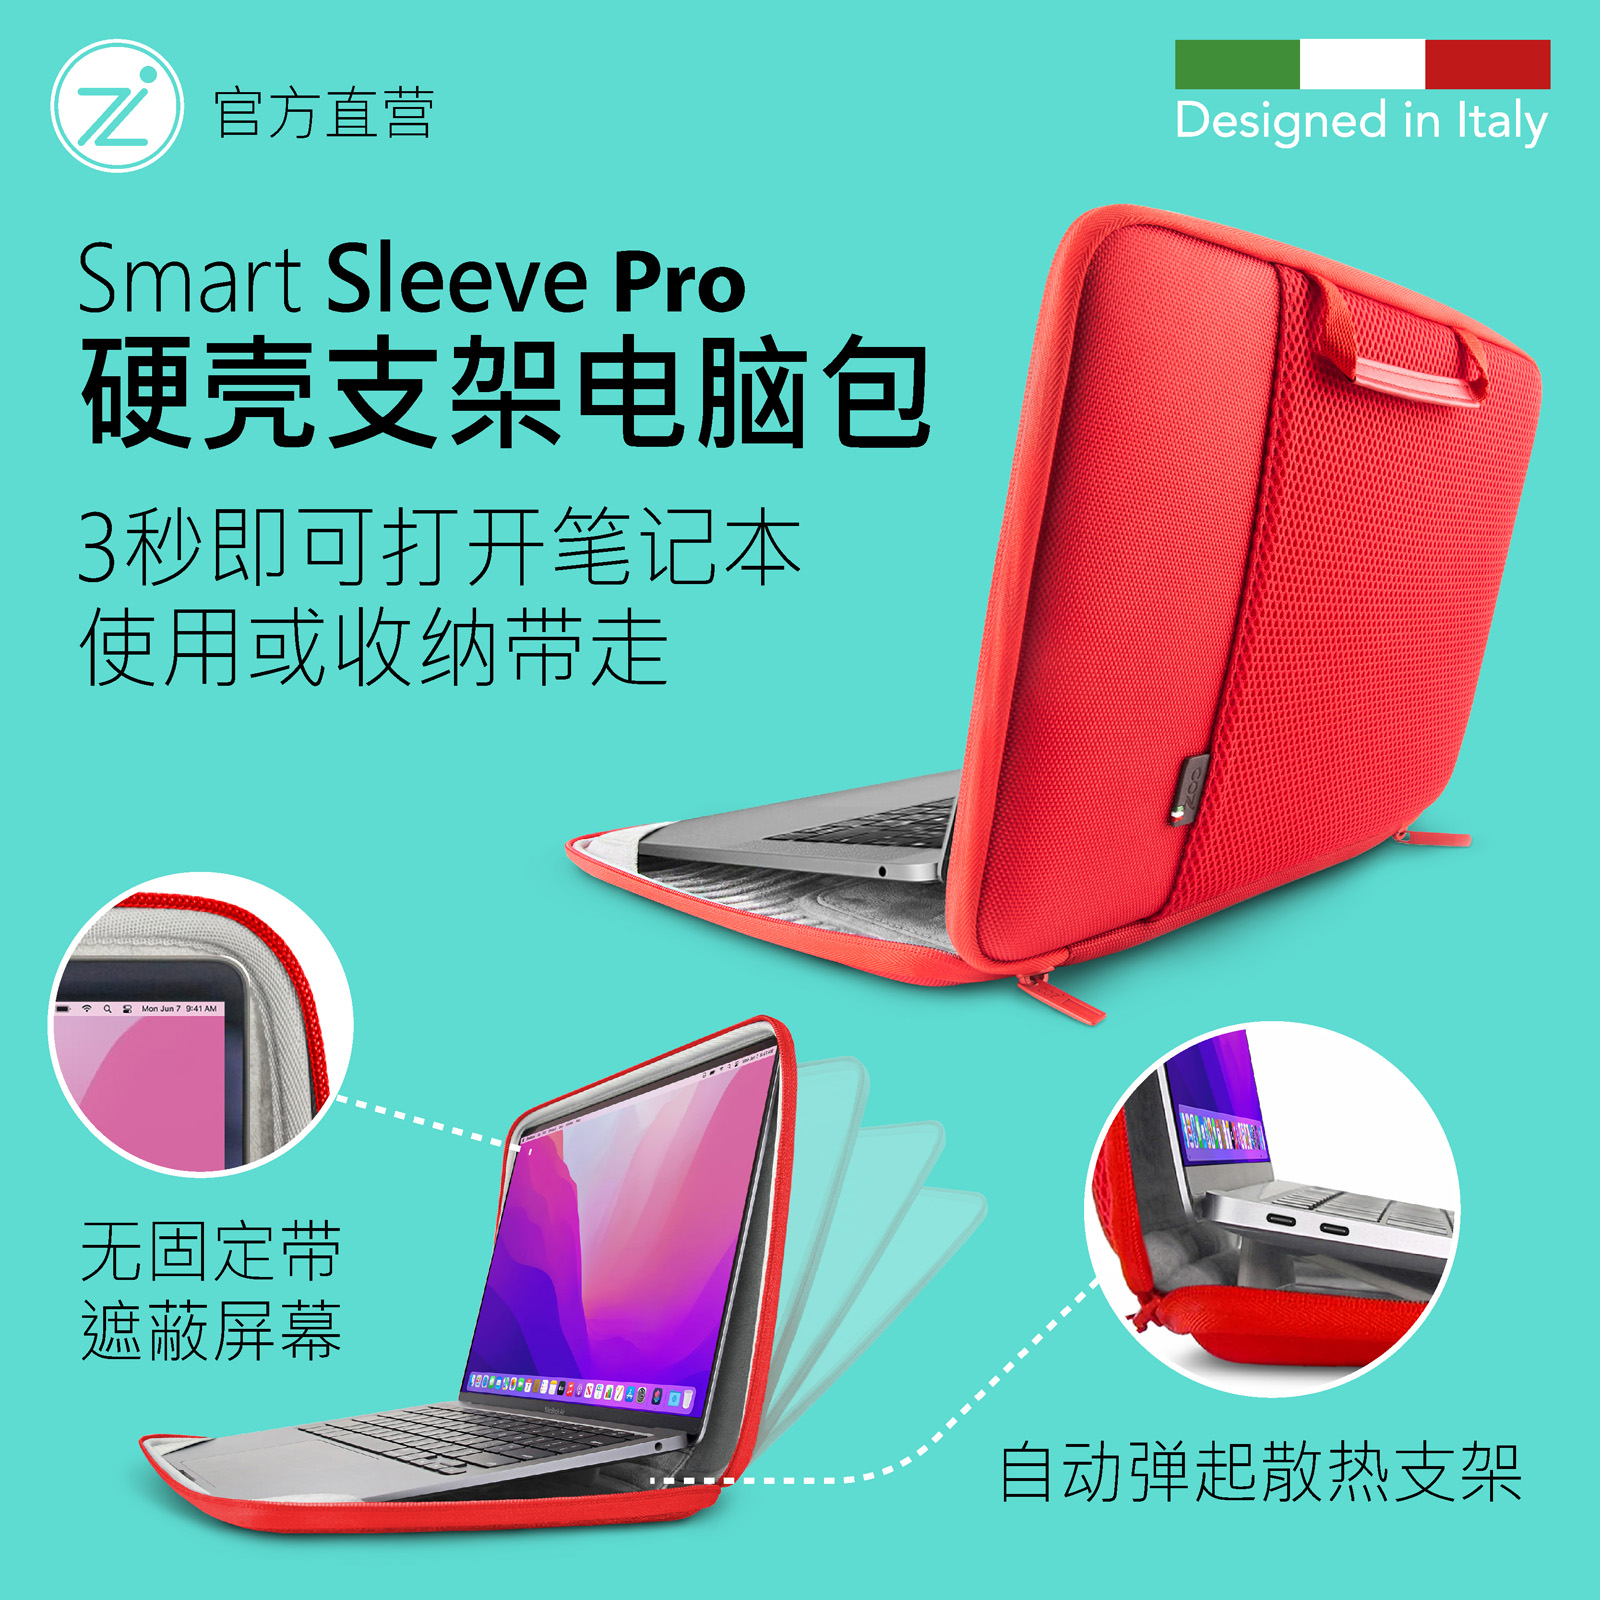 COZI - Smart Sleeve 硬壳 支架电脑包 笔电包 笔记本包 电脑保护套 - 适用于13-16寸M1 M2 MacBook